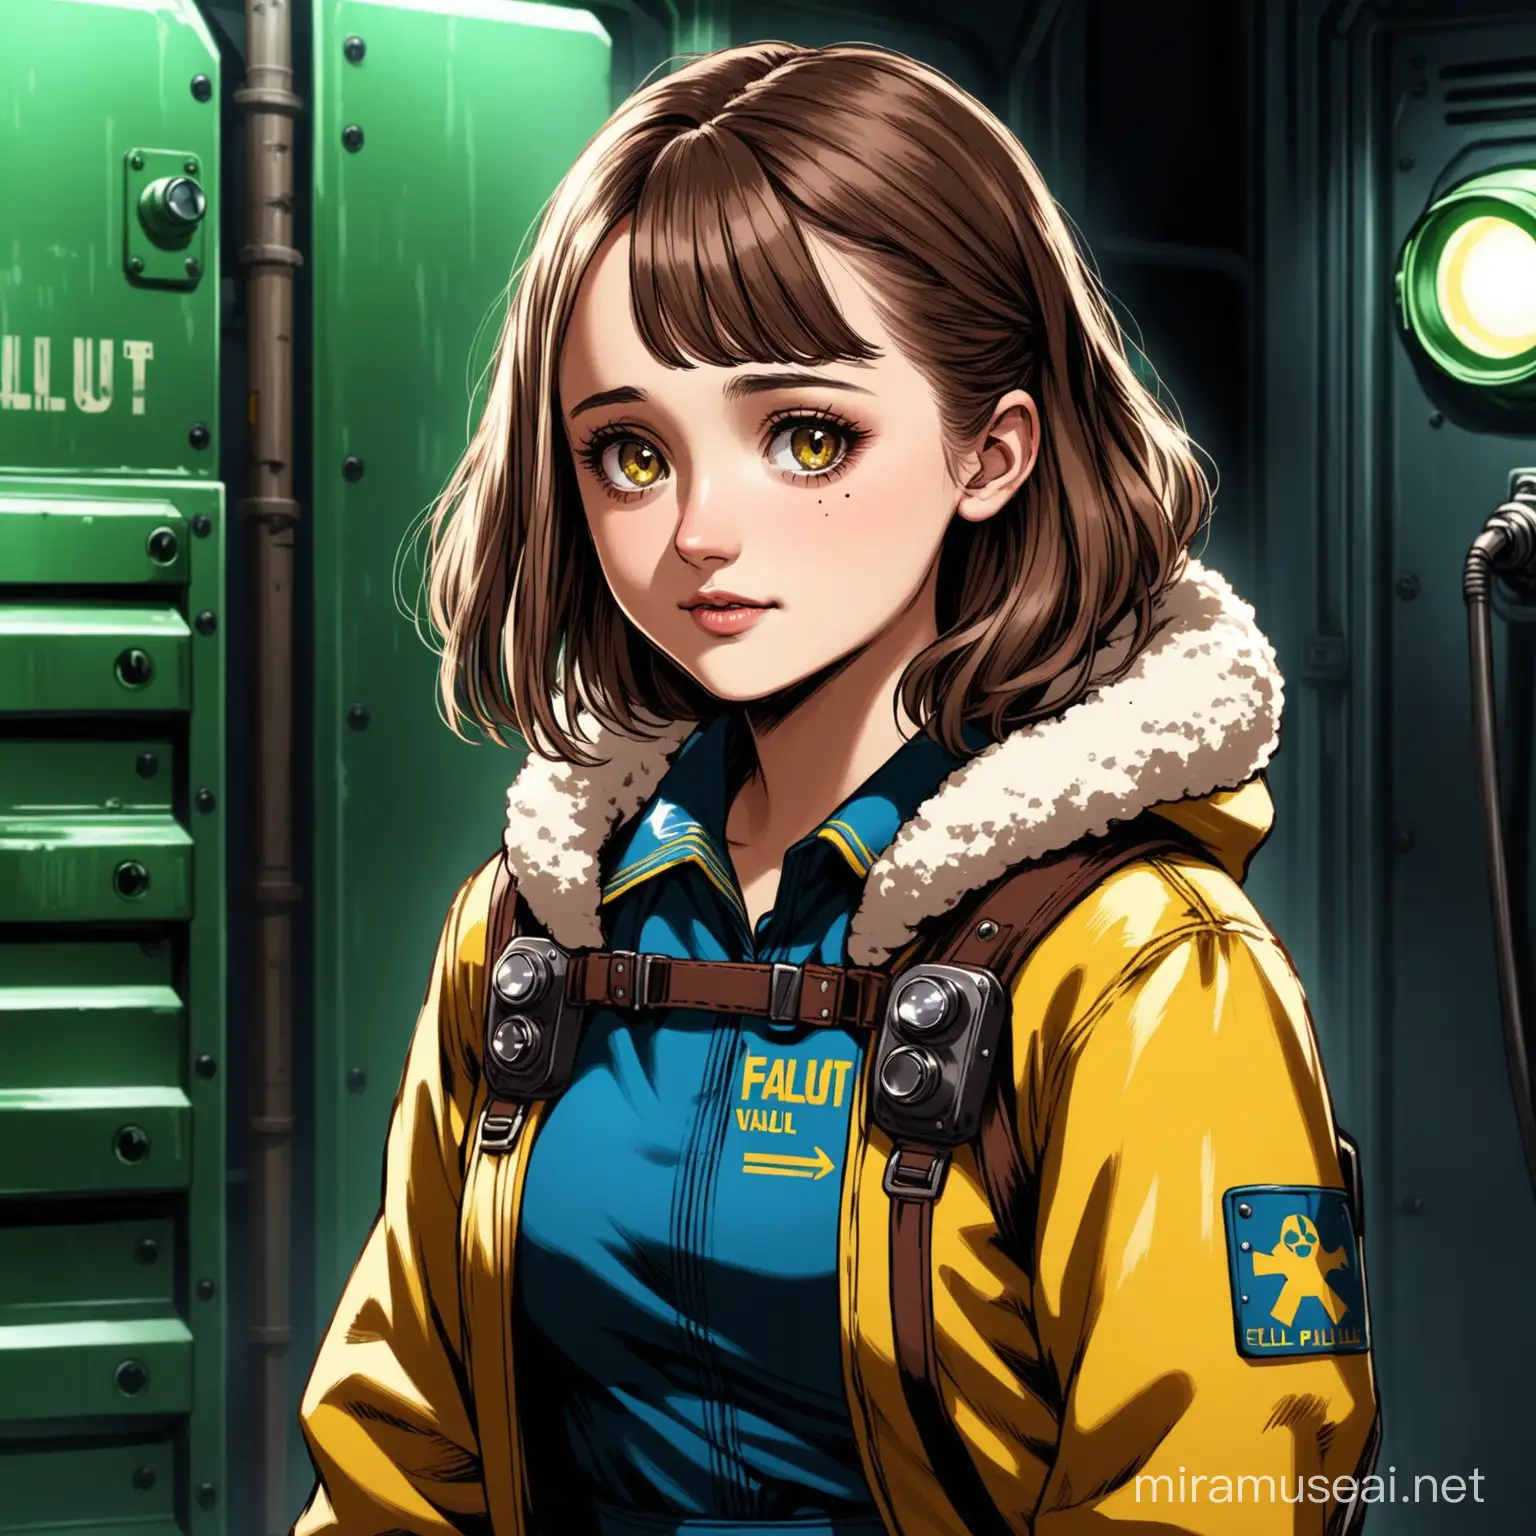 Actress Ella Purnell as a Fallout game vault dweller. 

